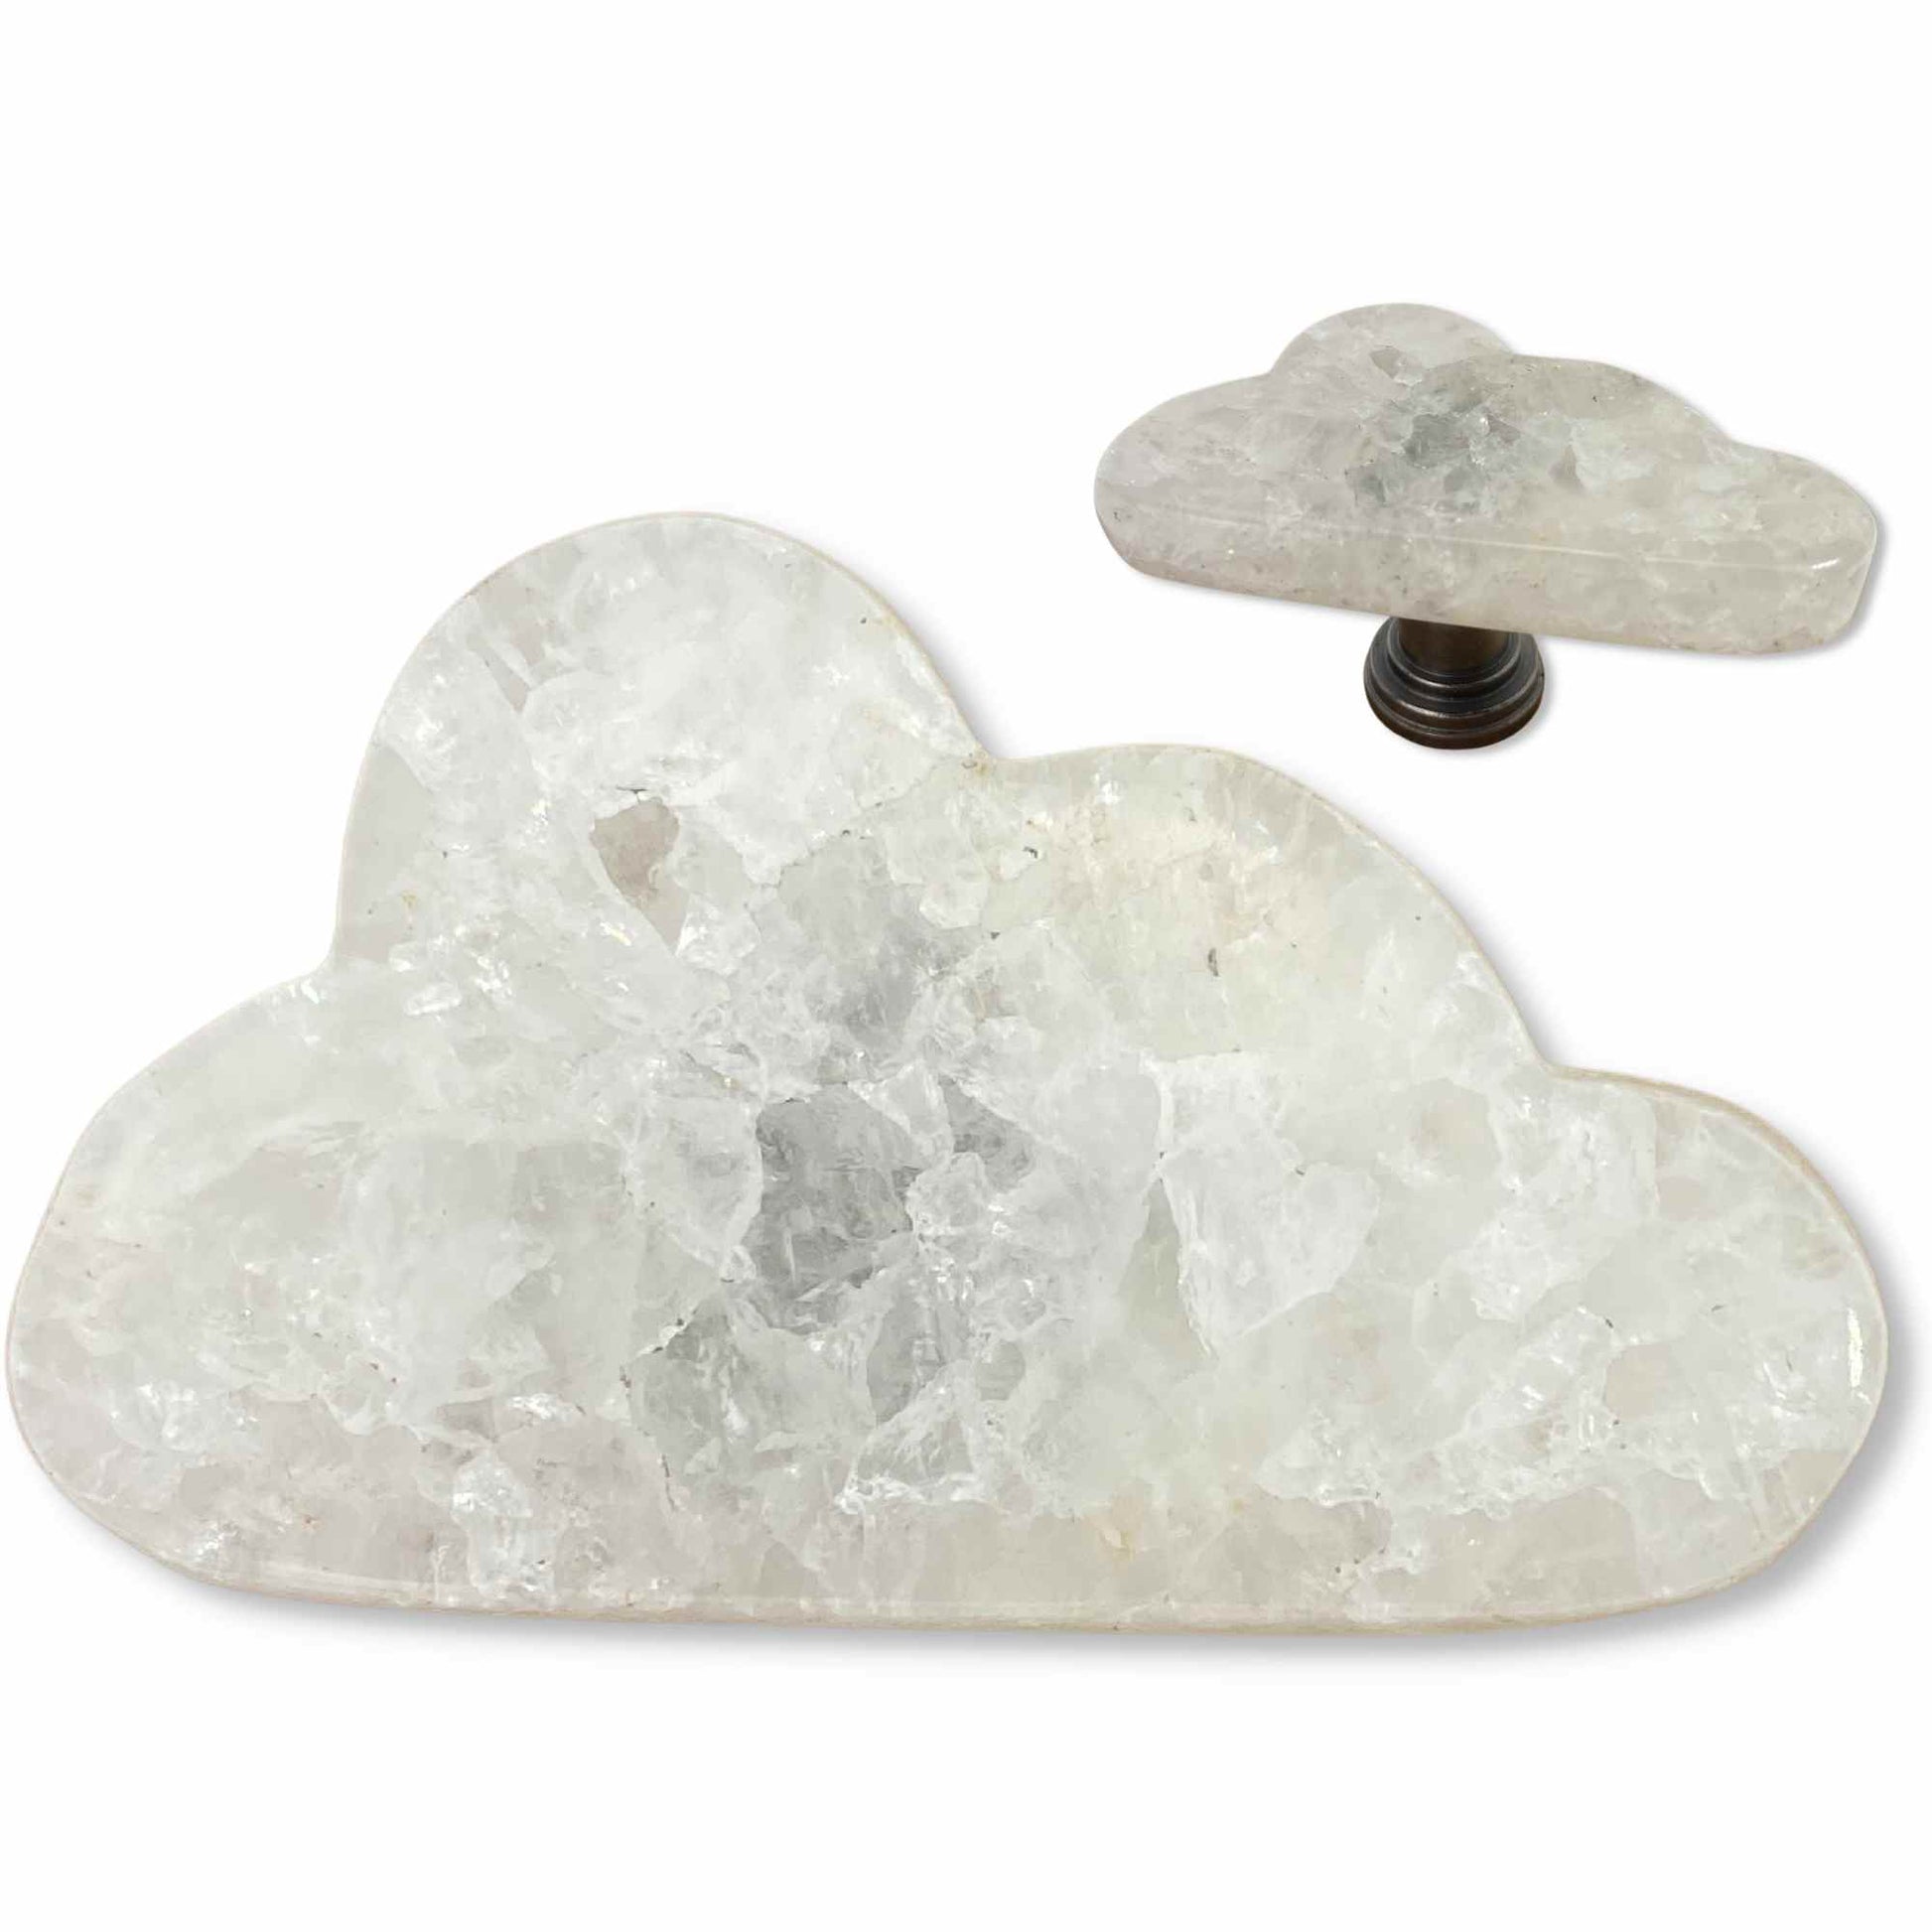 Cloud Shaped Drawer Knob made of white quartz